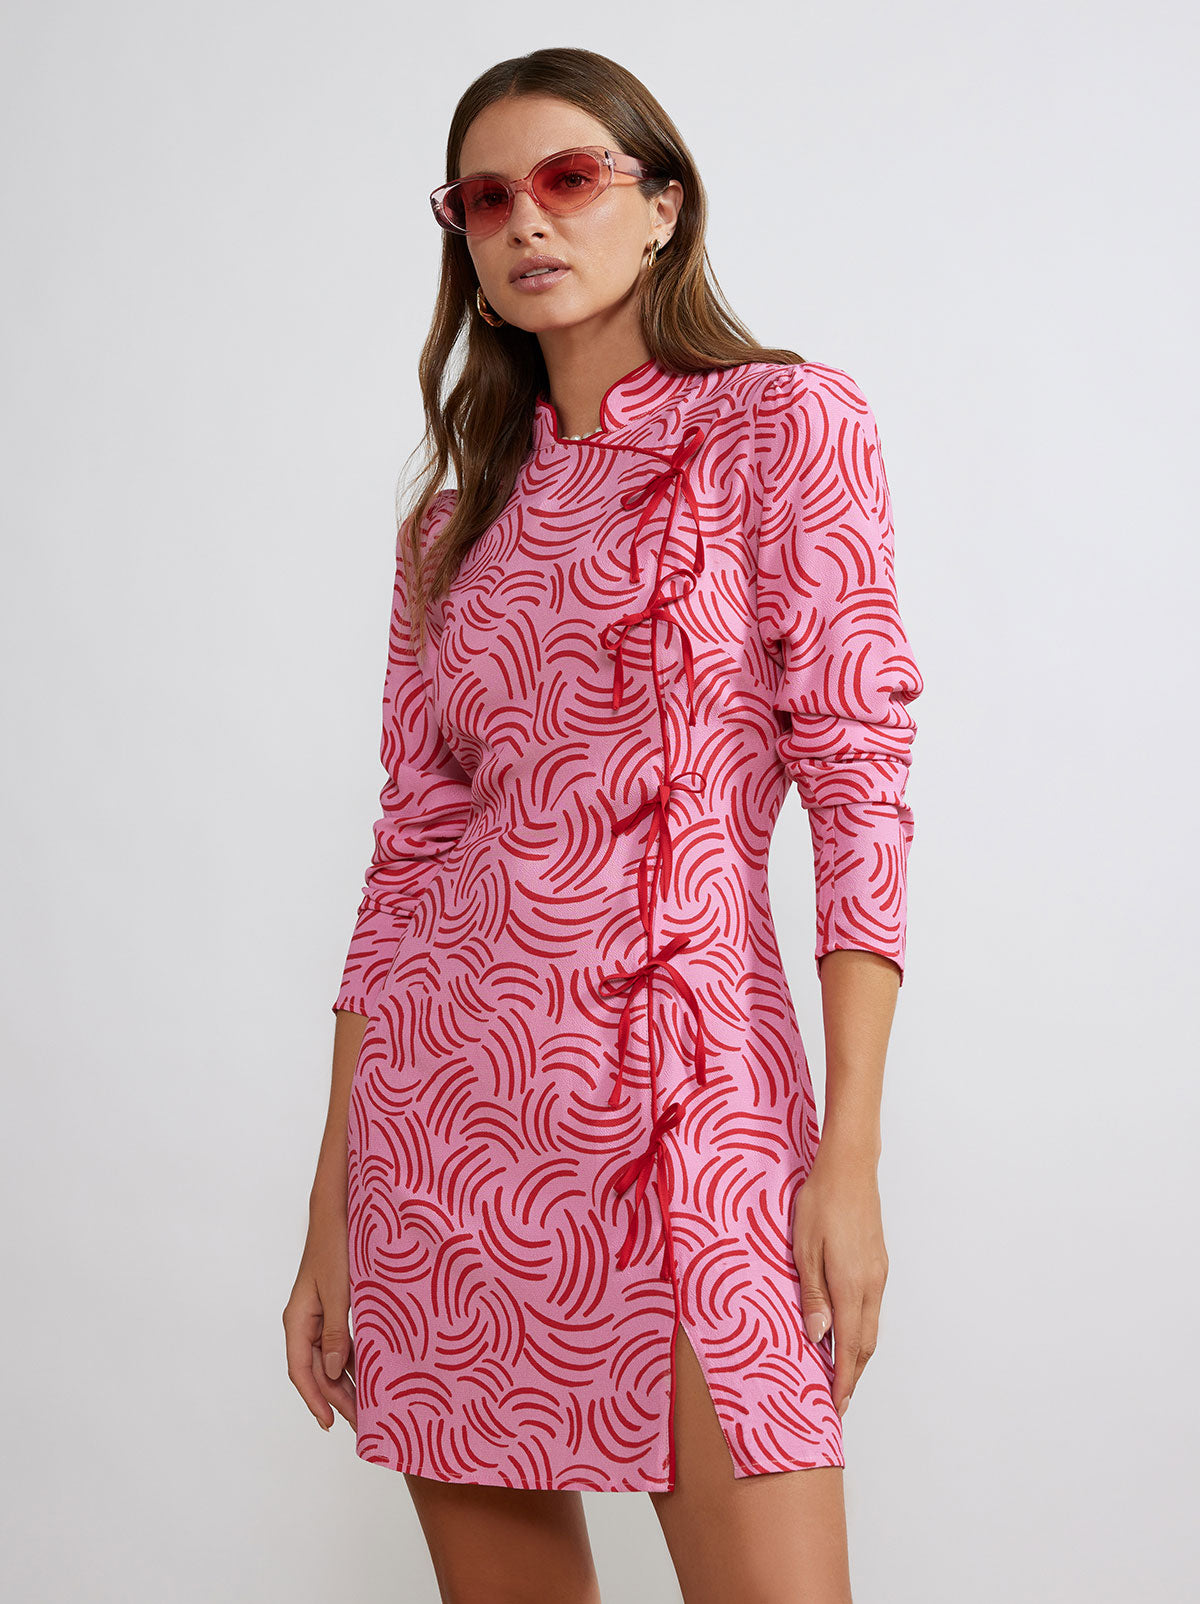 Allegra Pink Geo Mini Dress by KITRI Studio